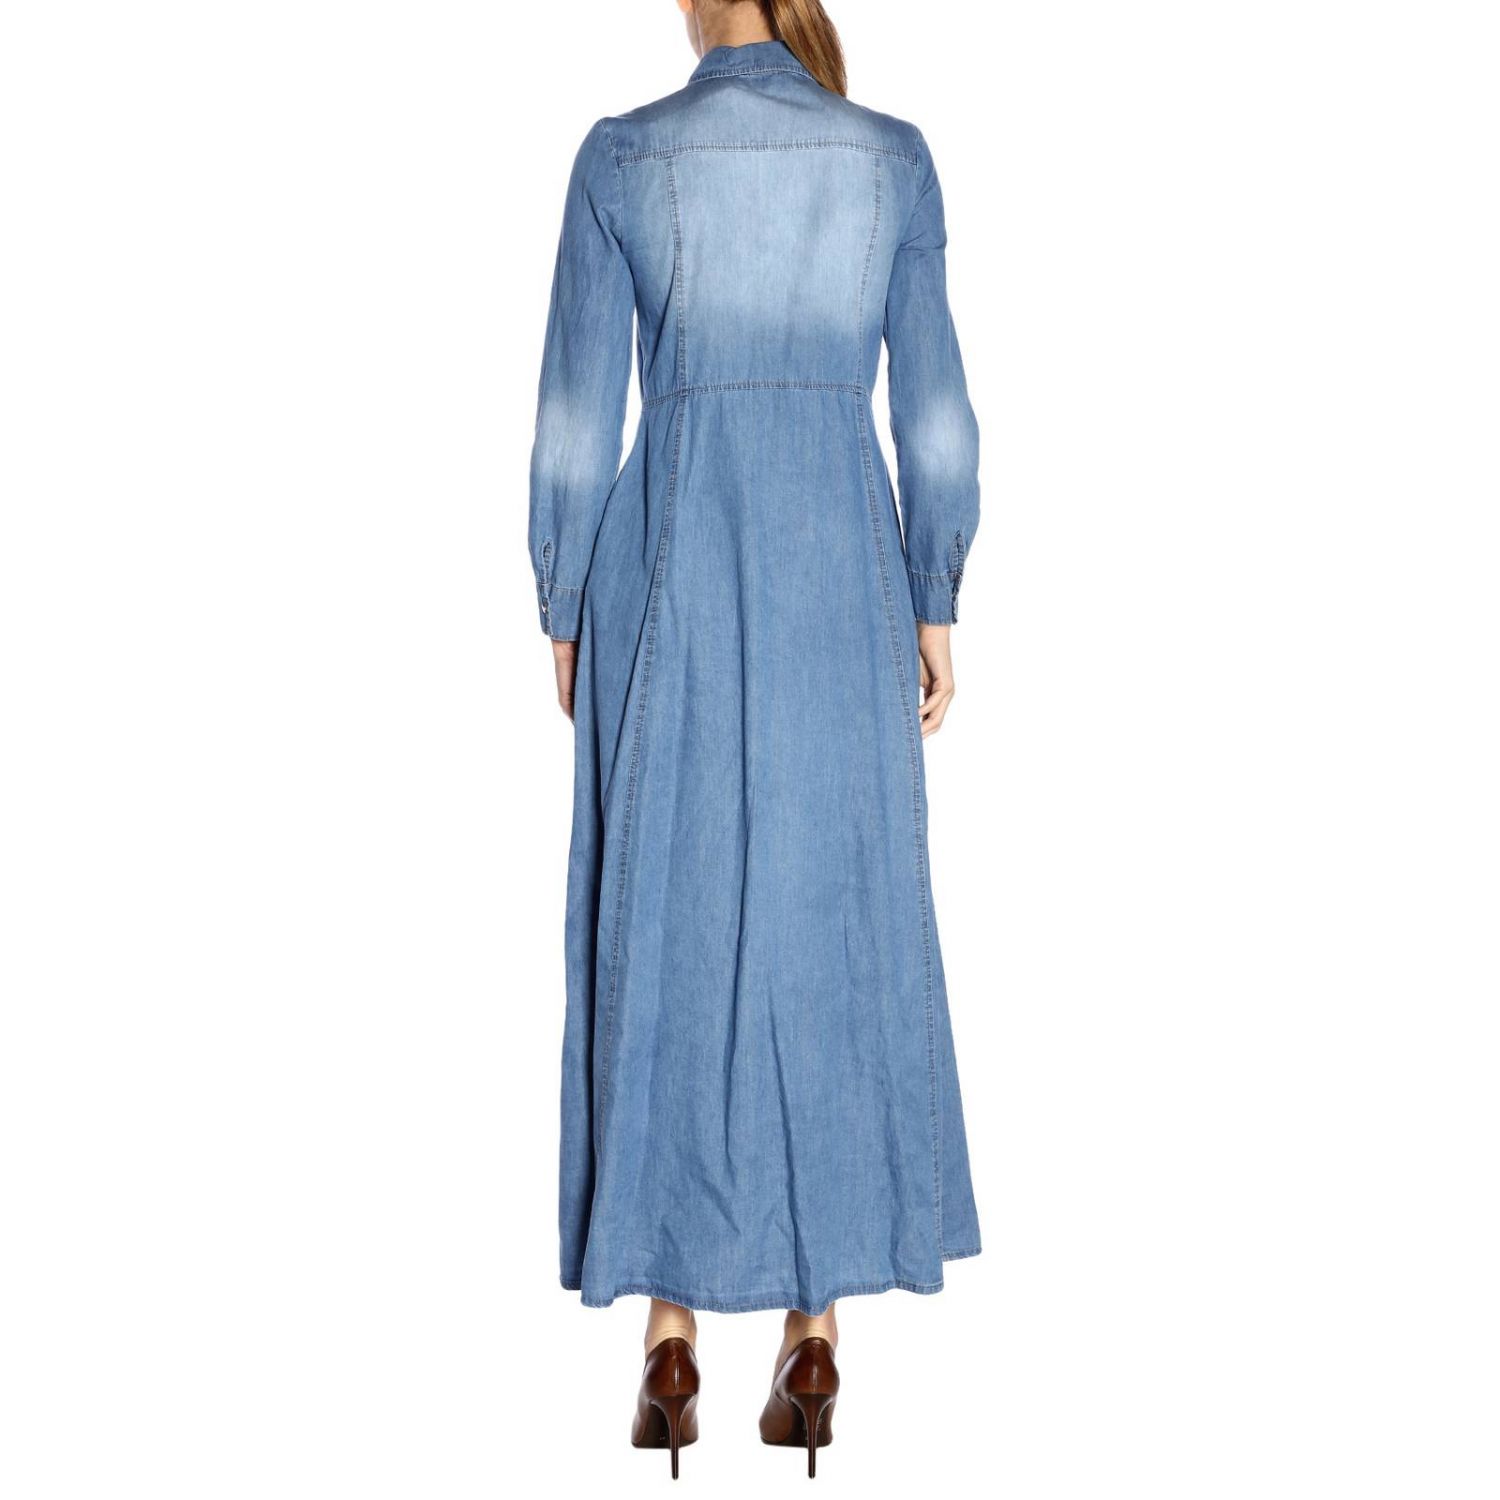 Kaos Outlet: dress for women - Denim | Kaos dress LP6AJ015-VU online on ...